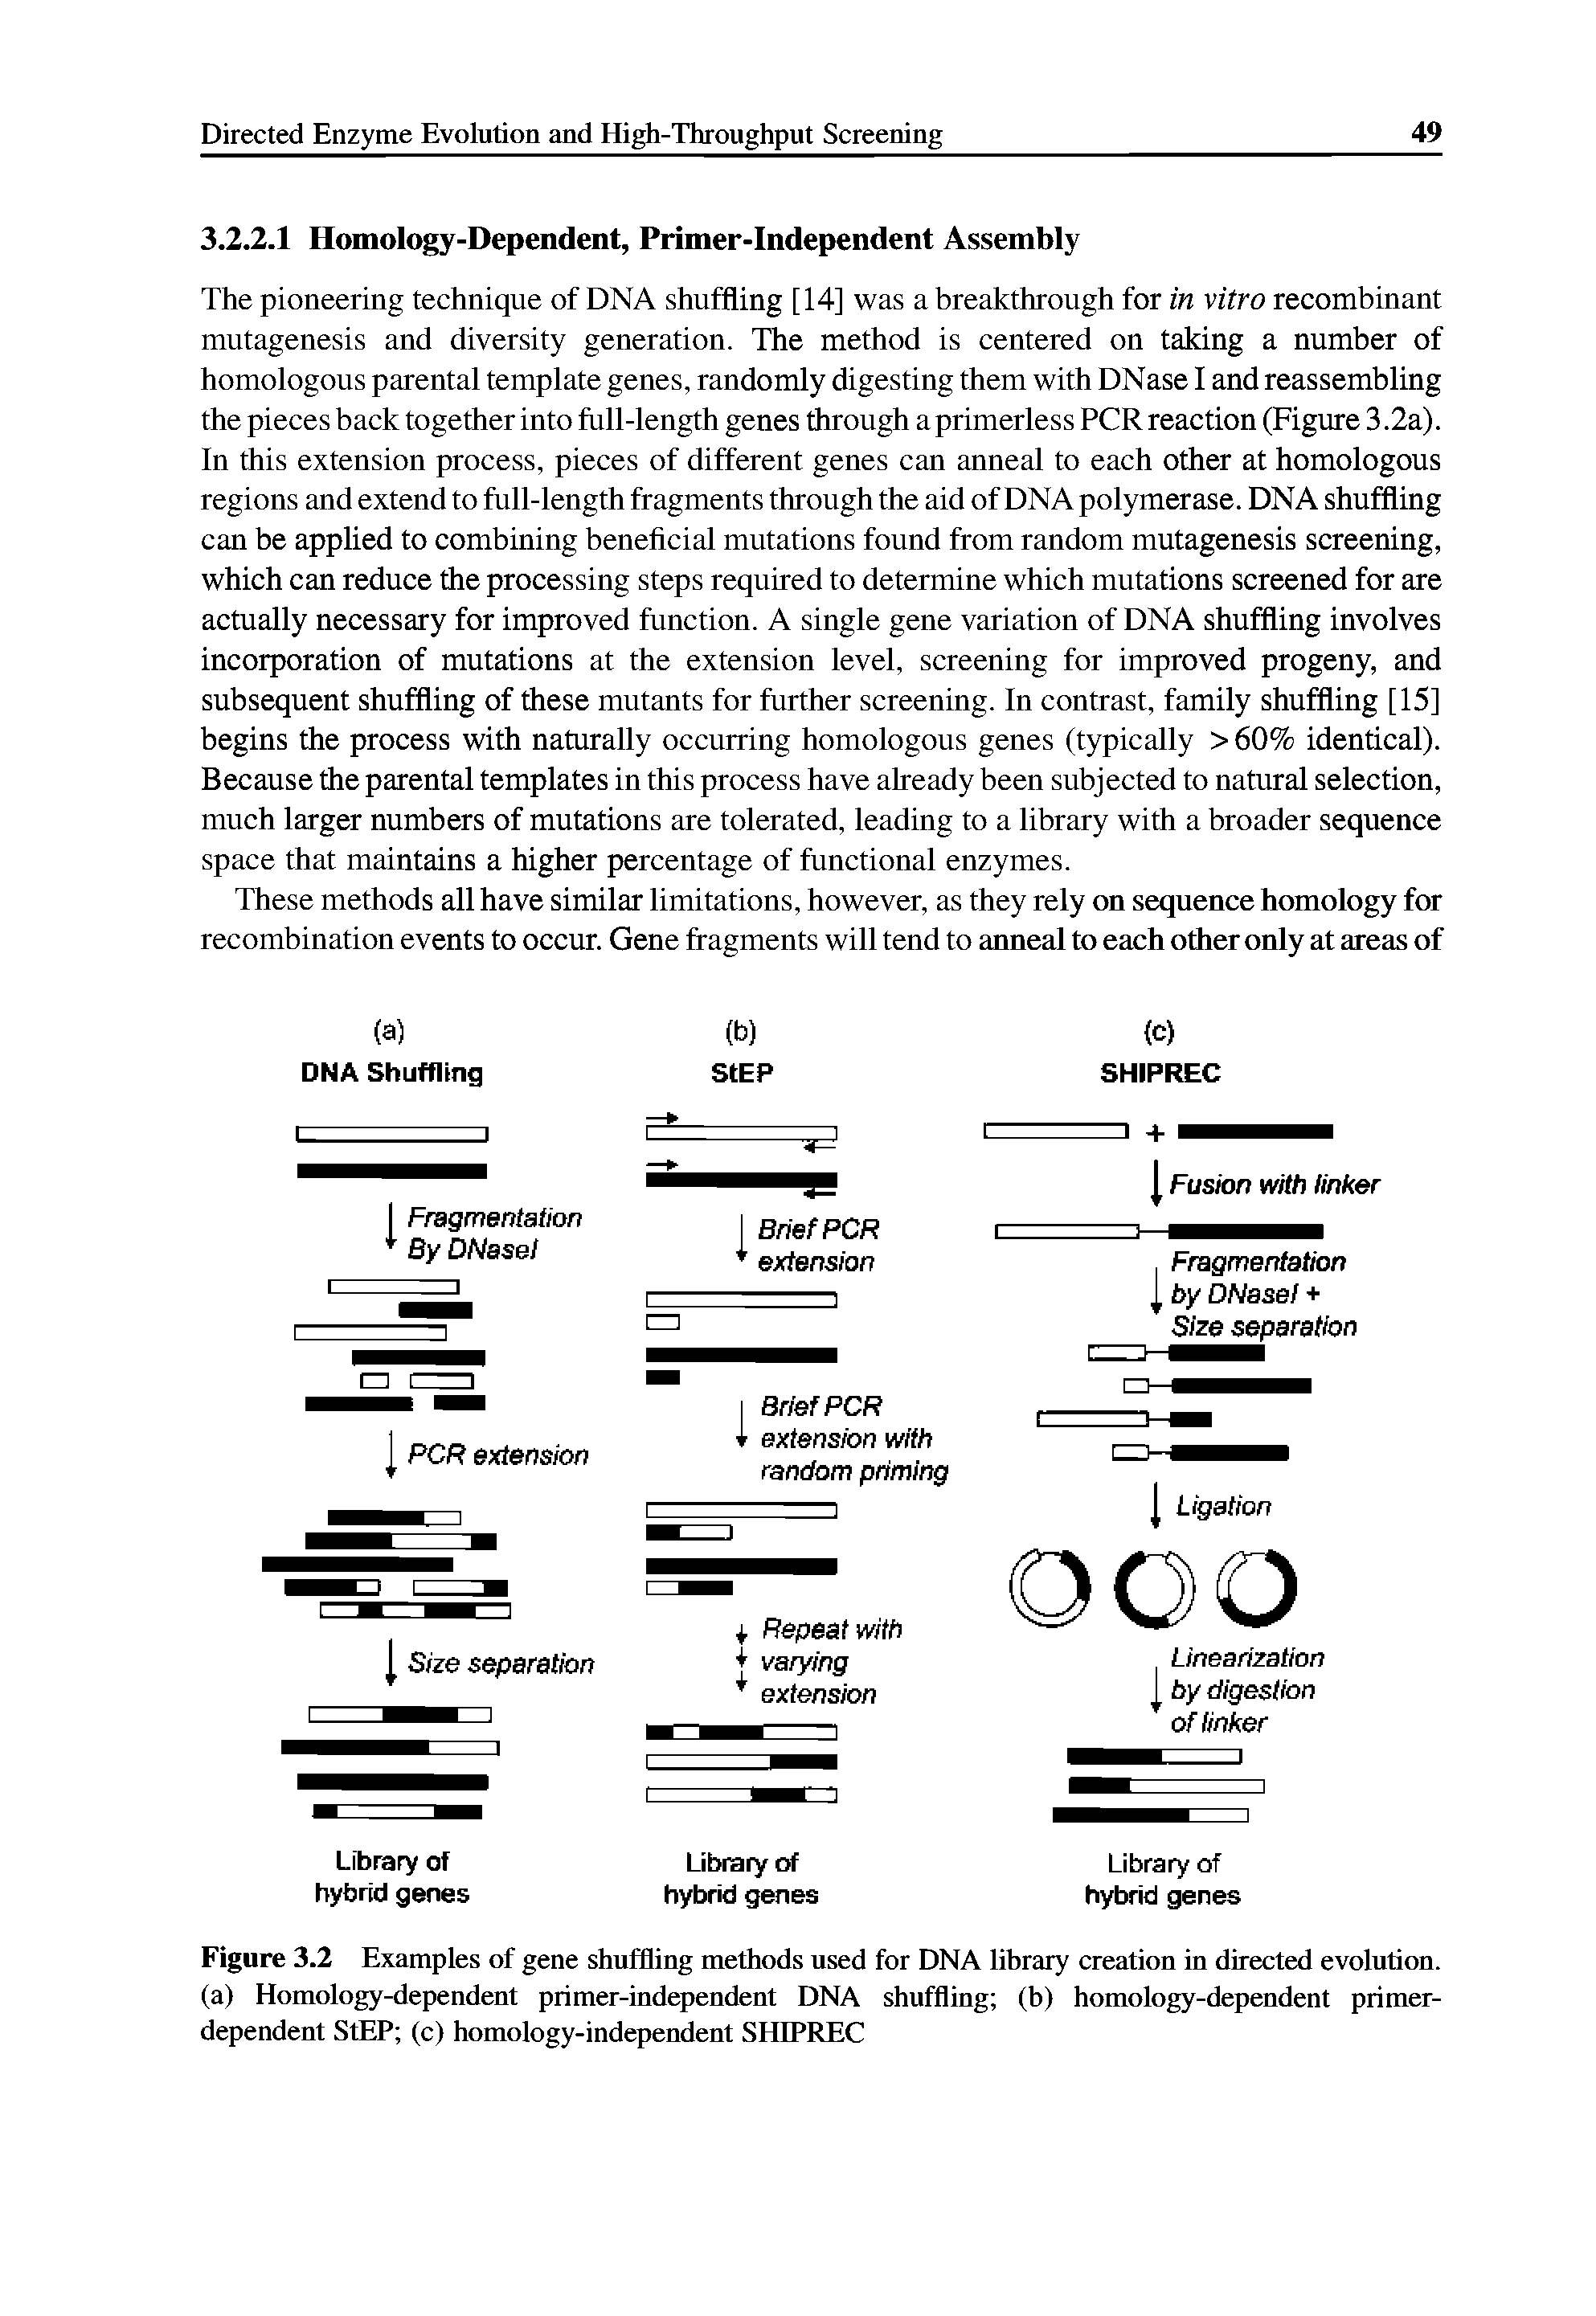 Figure 3.2 Examples of gene shuffling methods used for DNA library creation in directed evolution, (a) Homology-dependent primer-independent DNA shuffling (b) homology-dependent primer-dependent StEP (c) homology-independent SHIPREC...